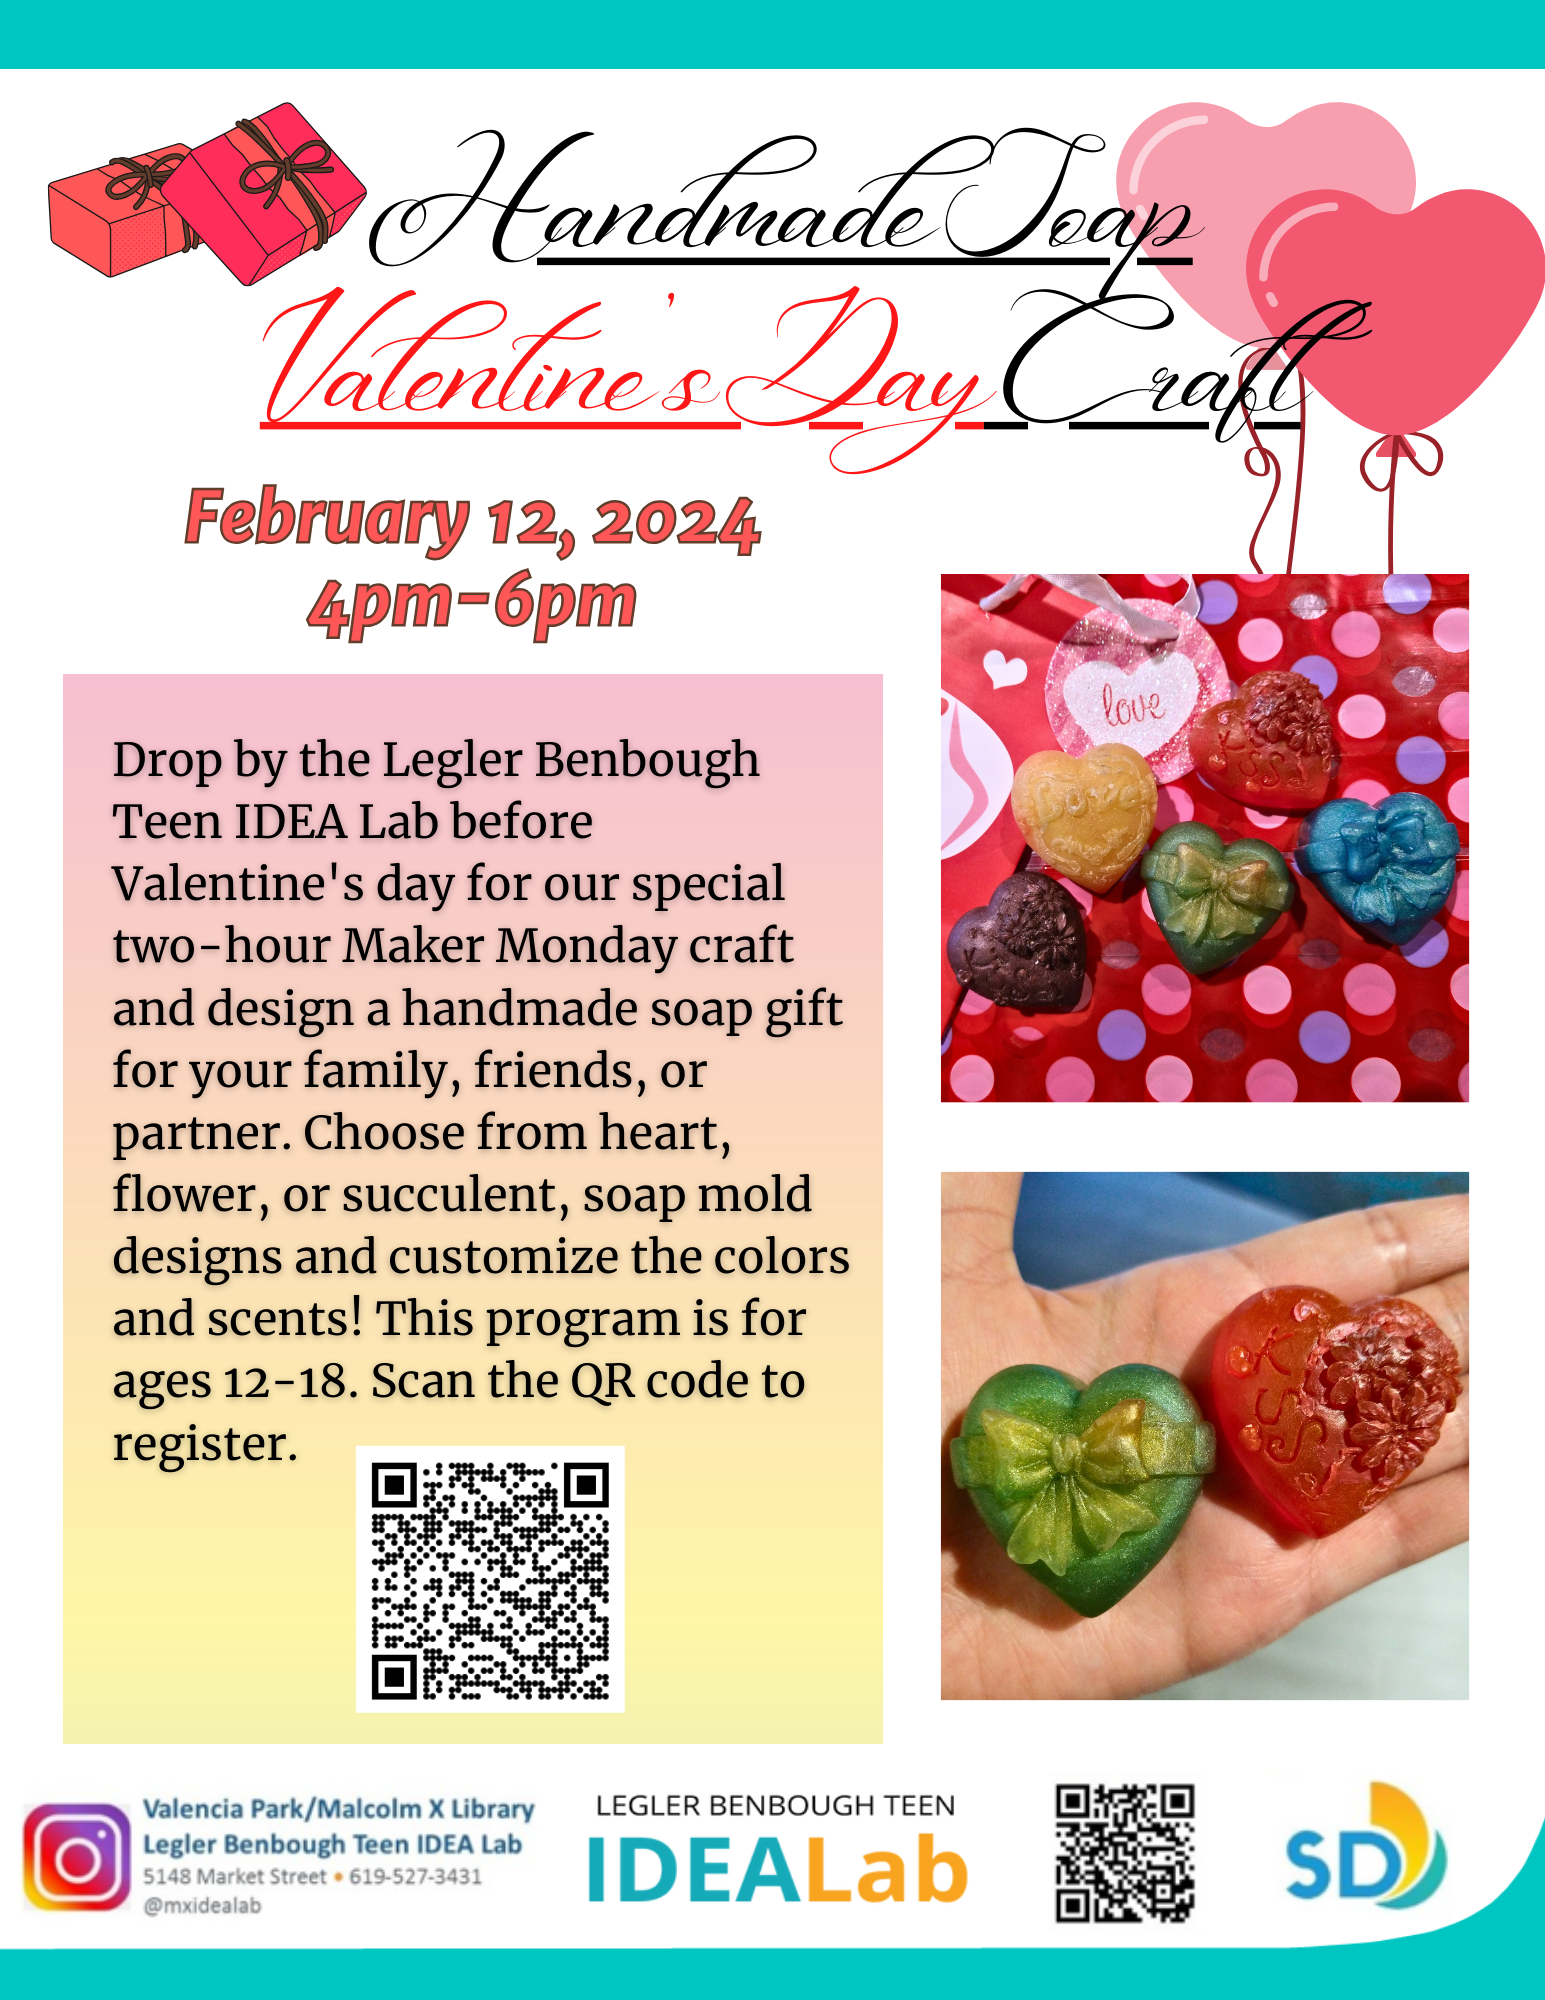 Maker Monday February 12th 2024 Valentine's Day Craft Handmade Soaps